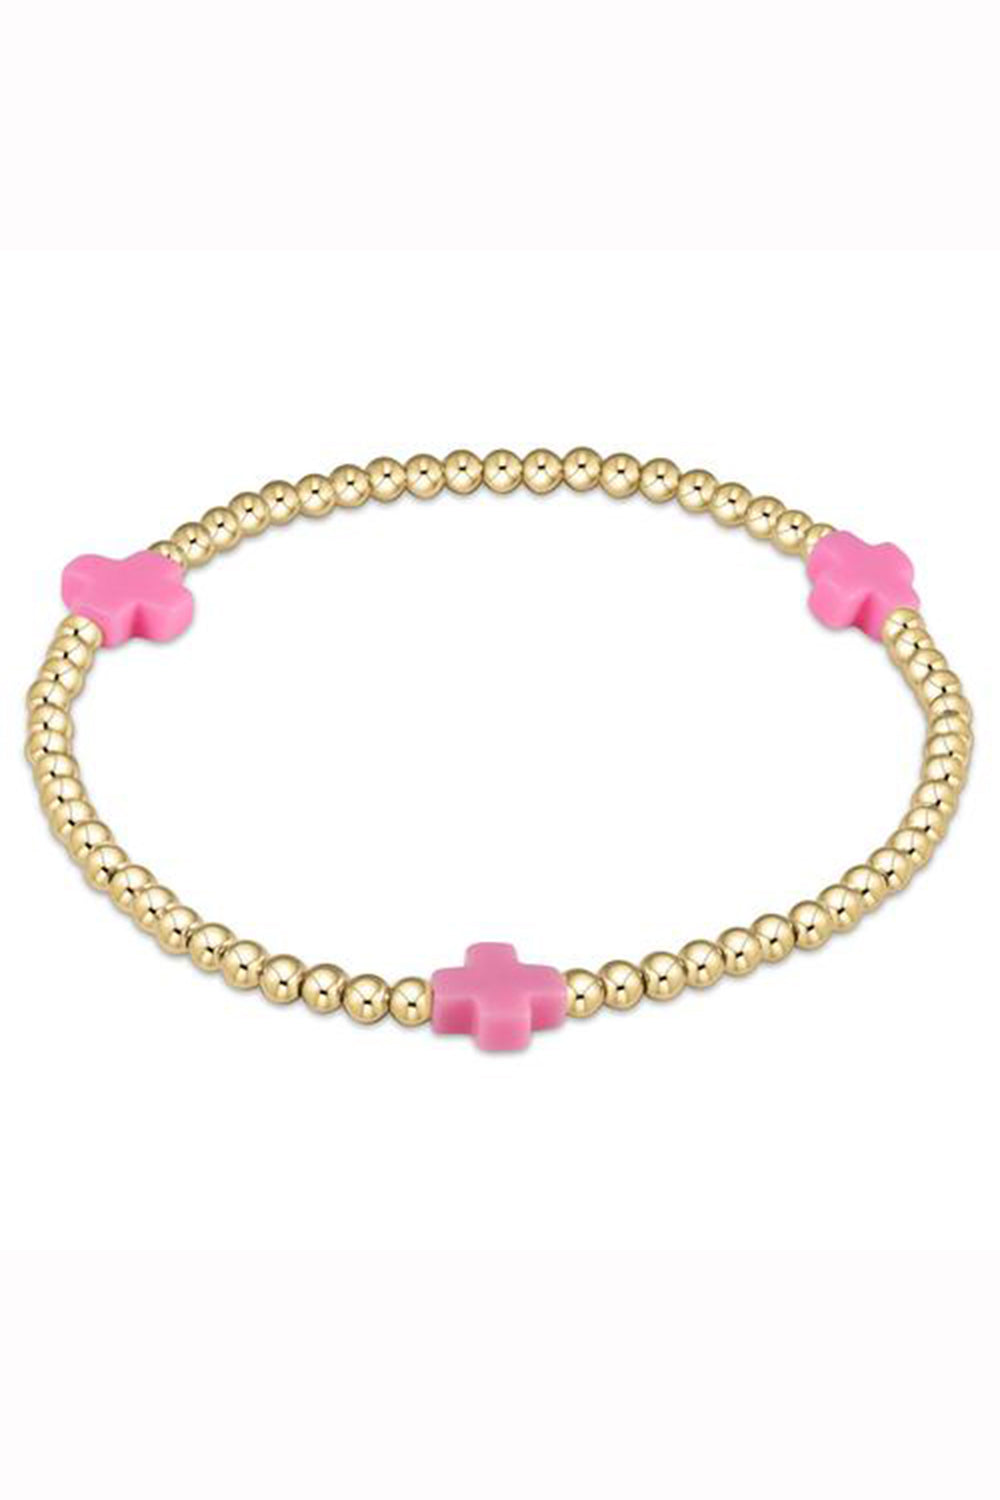 EN Gold Signature Cross Pattern Bracelet 3mm - Bright Pink